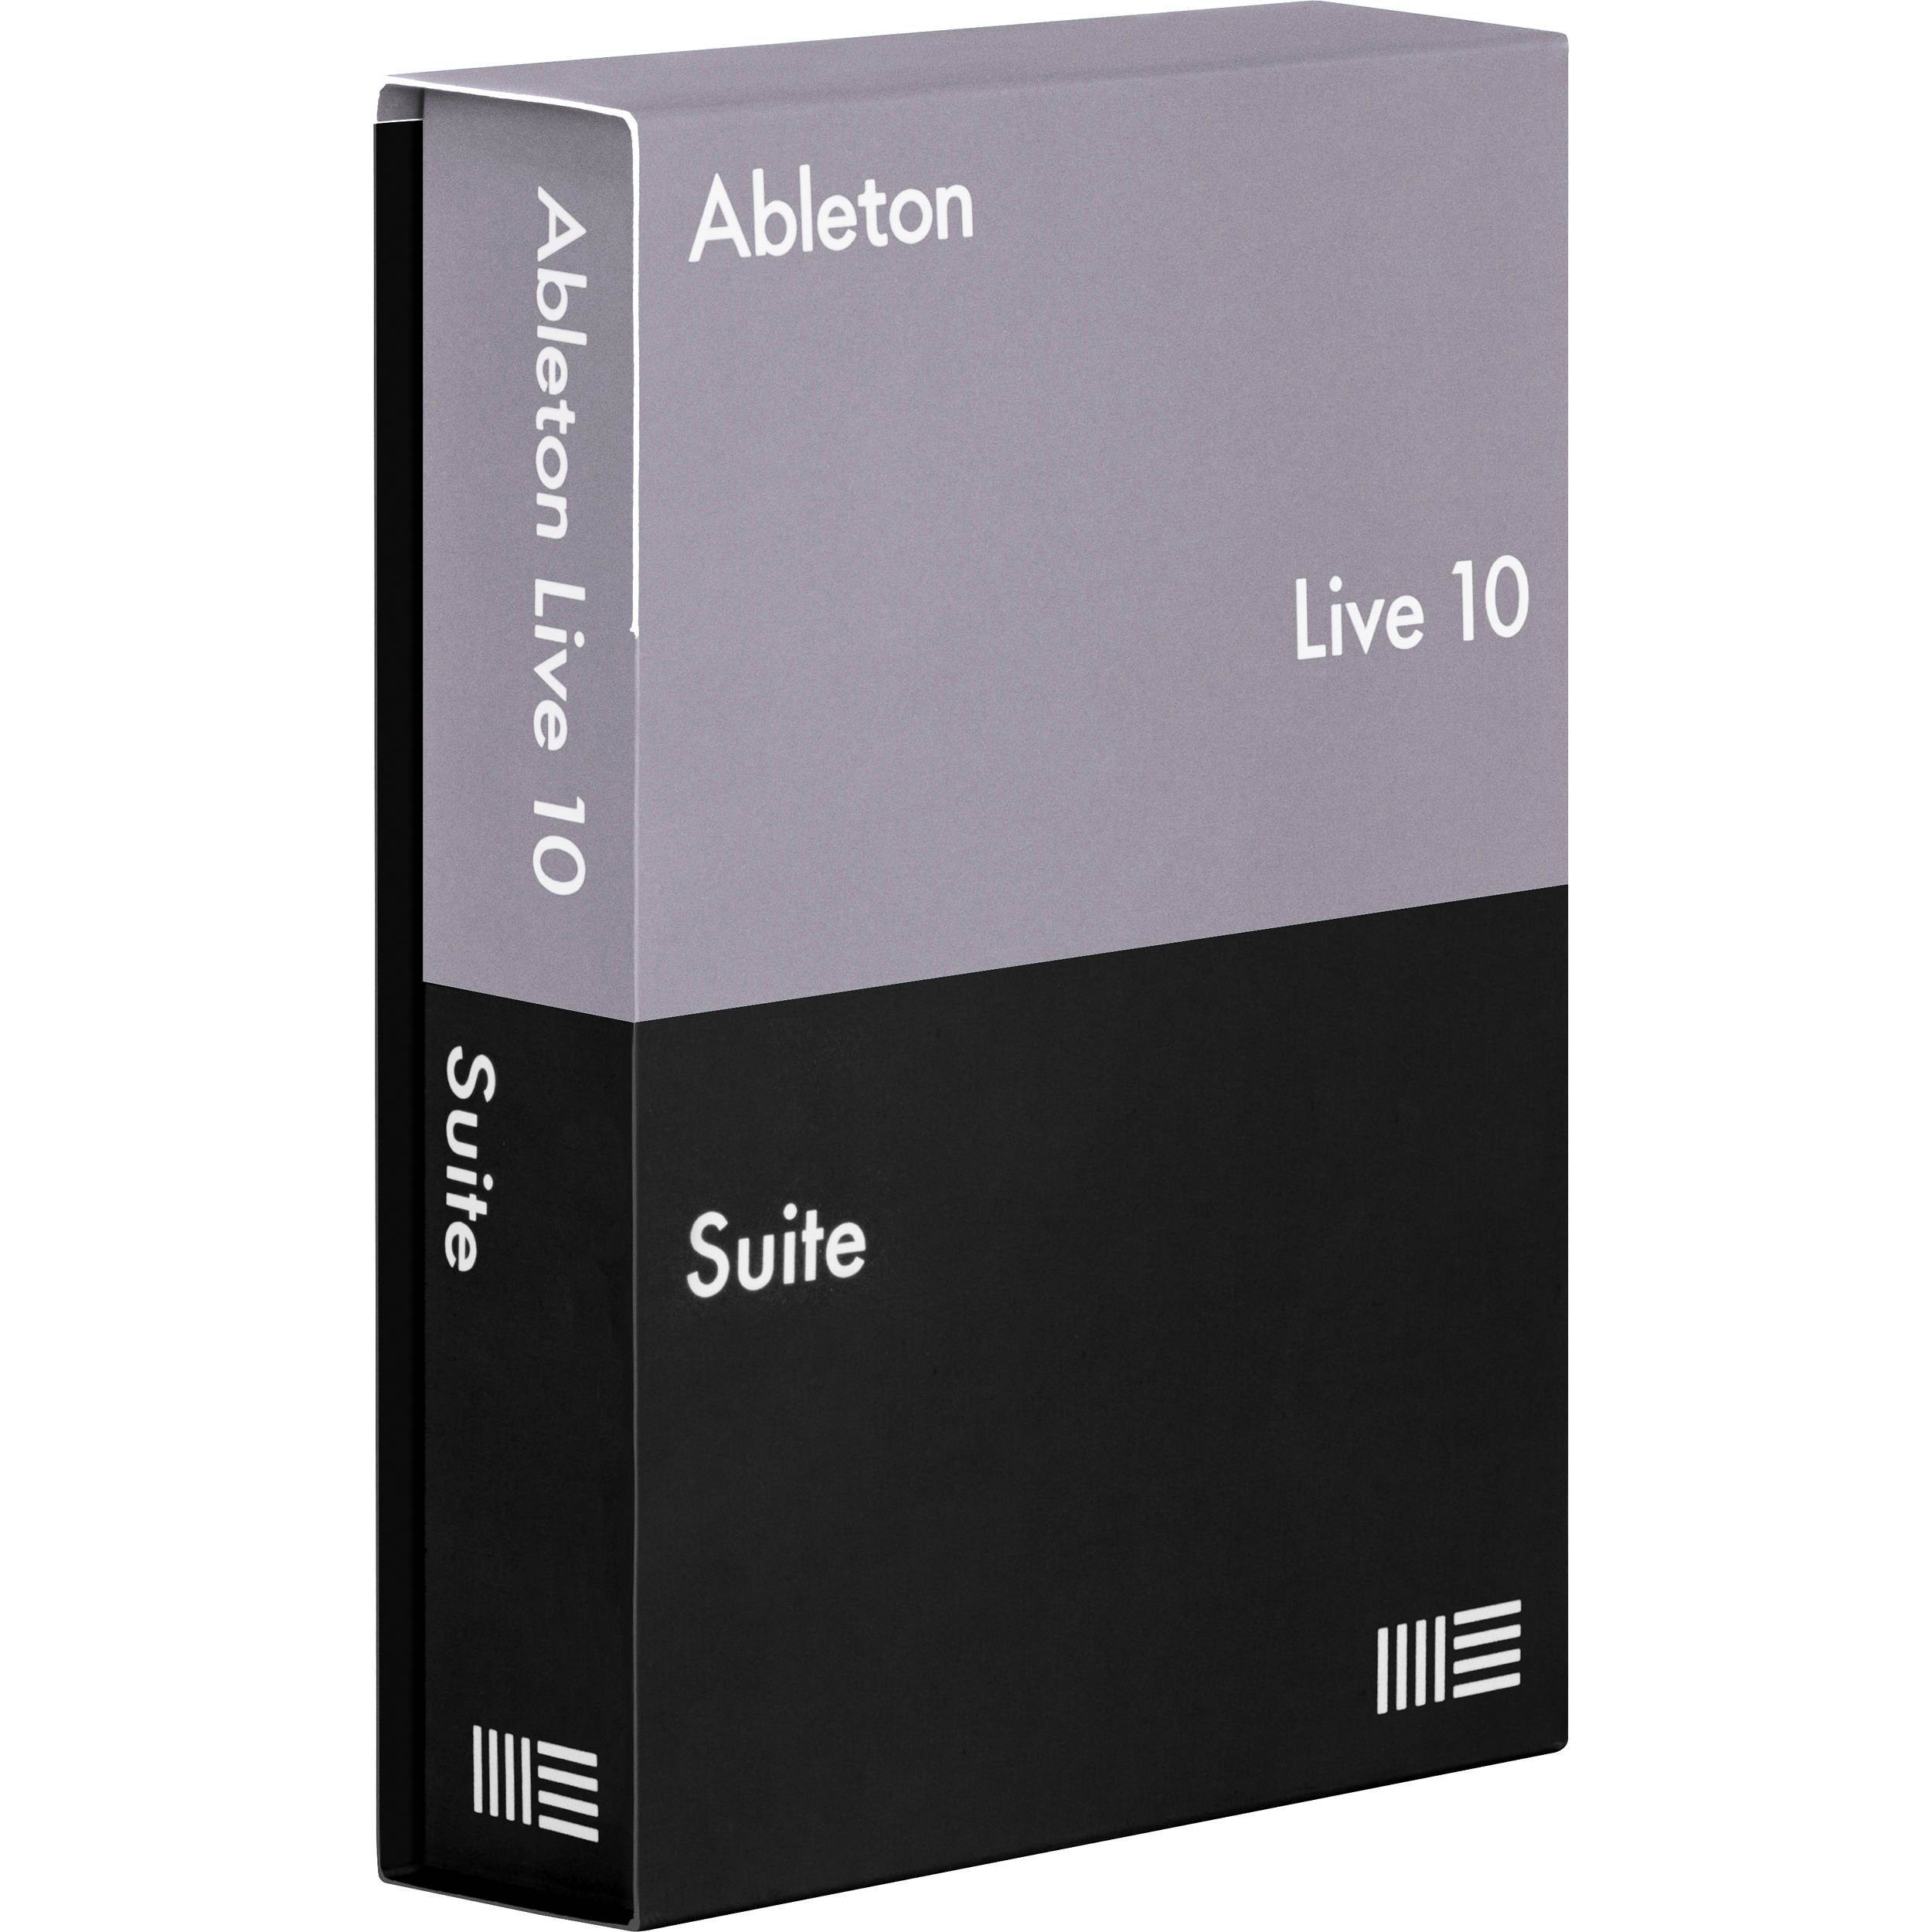 Exynos Ableton 11 Suite Live DTM/DAW